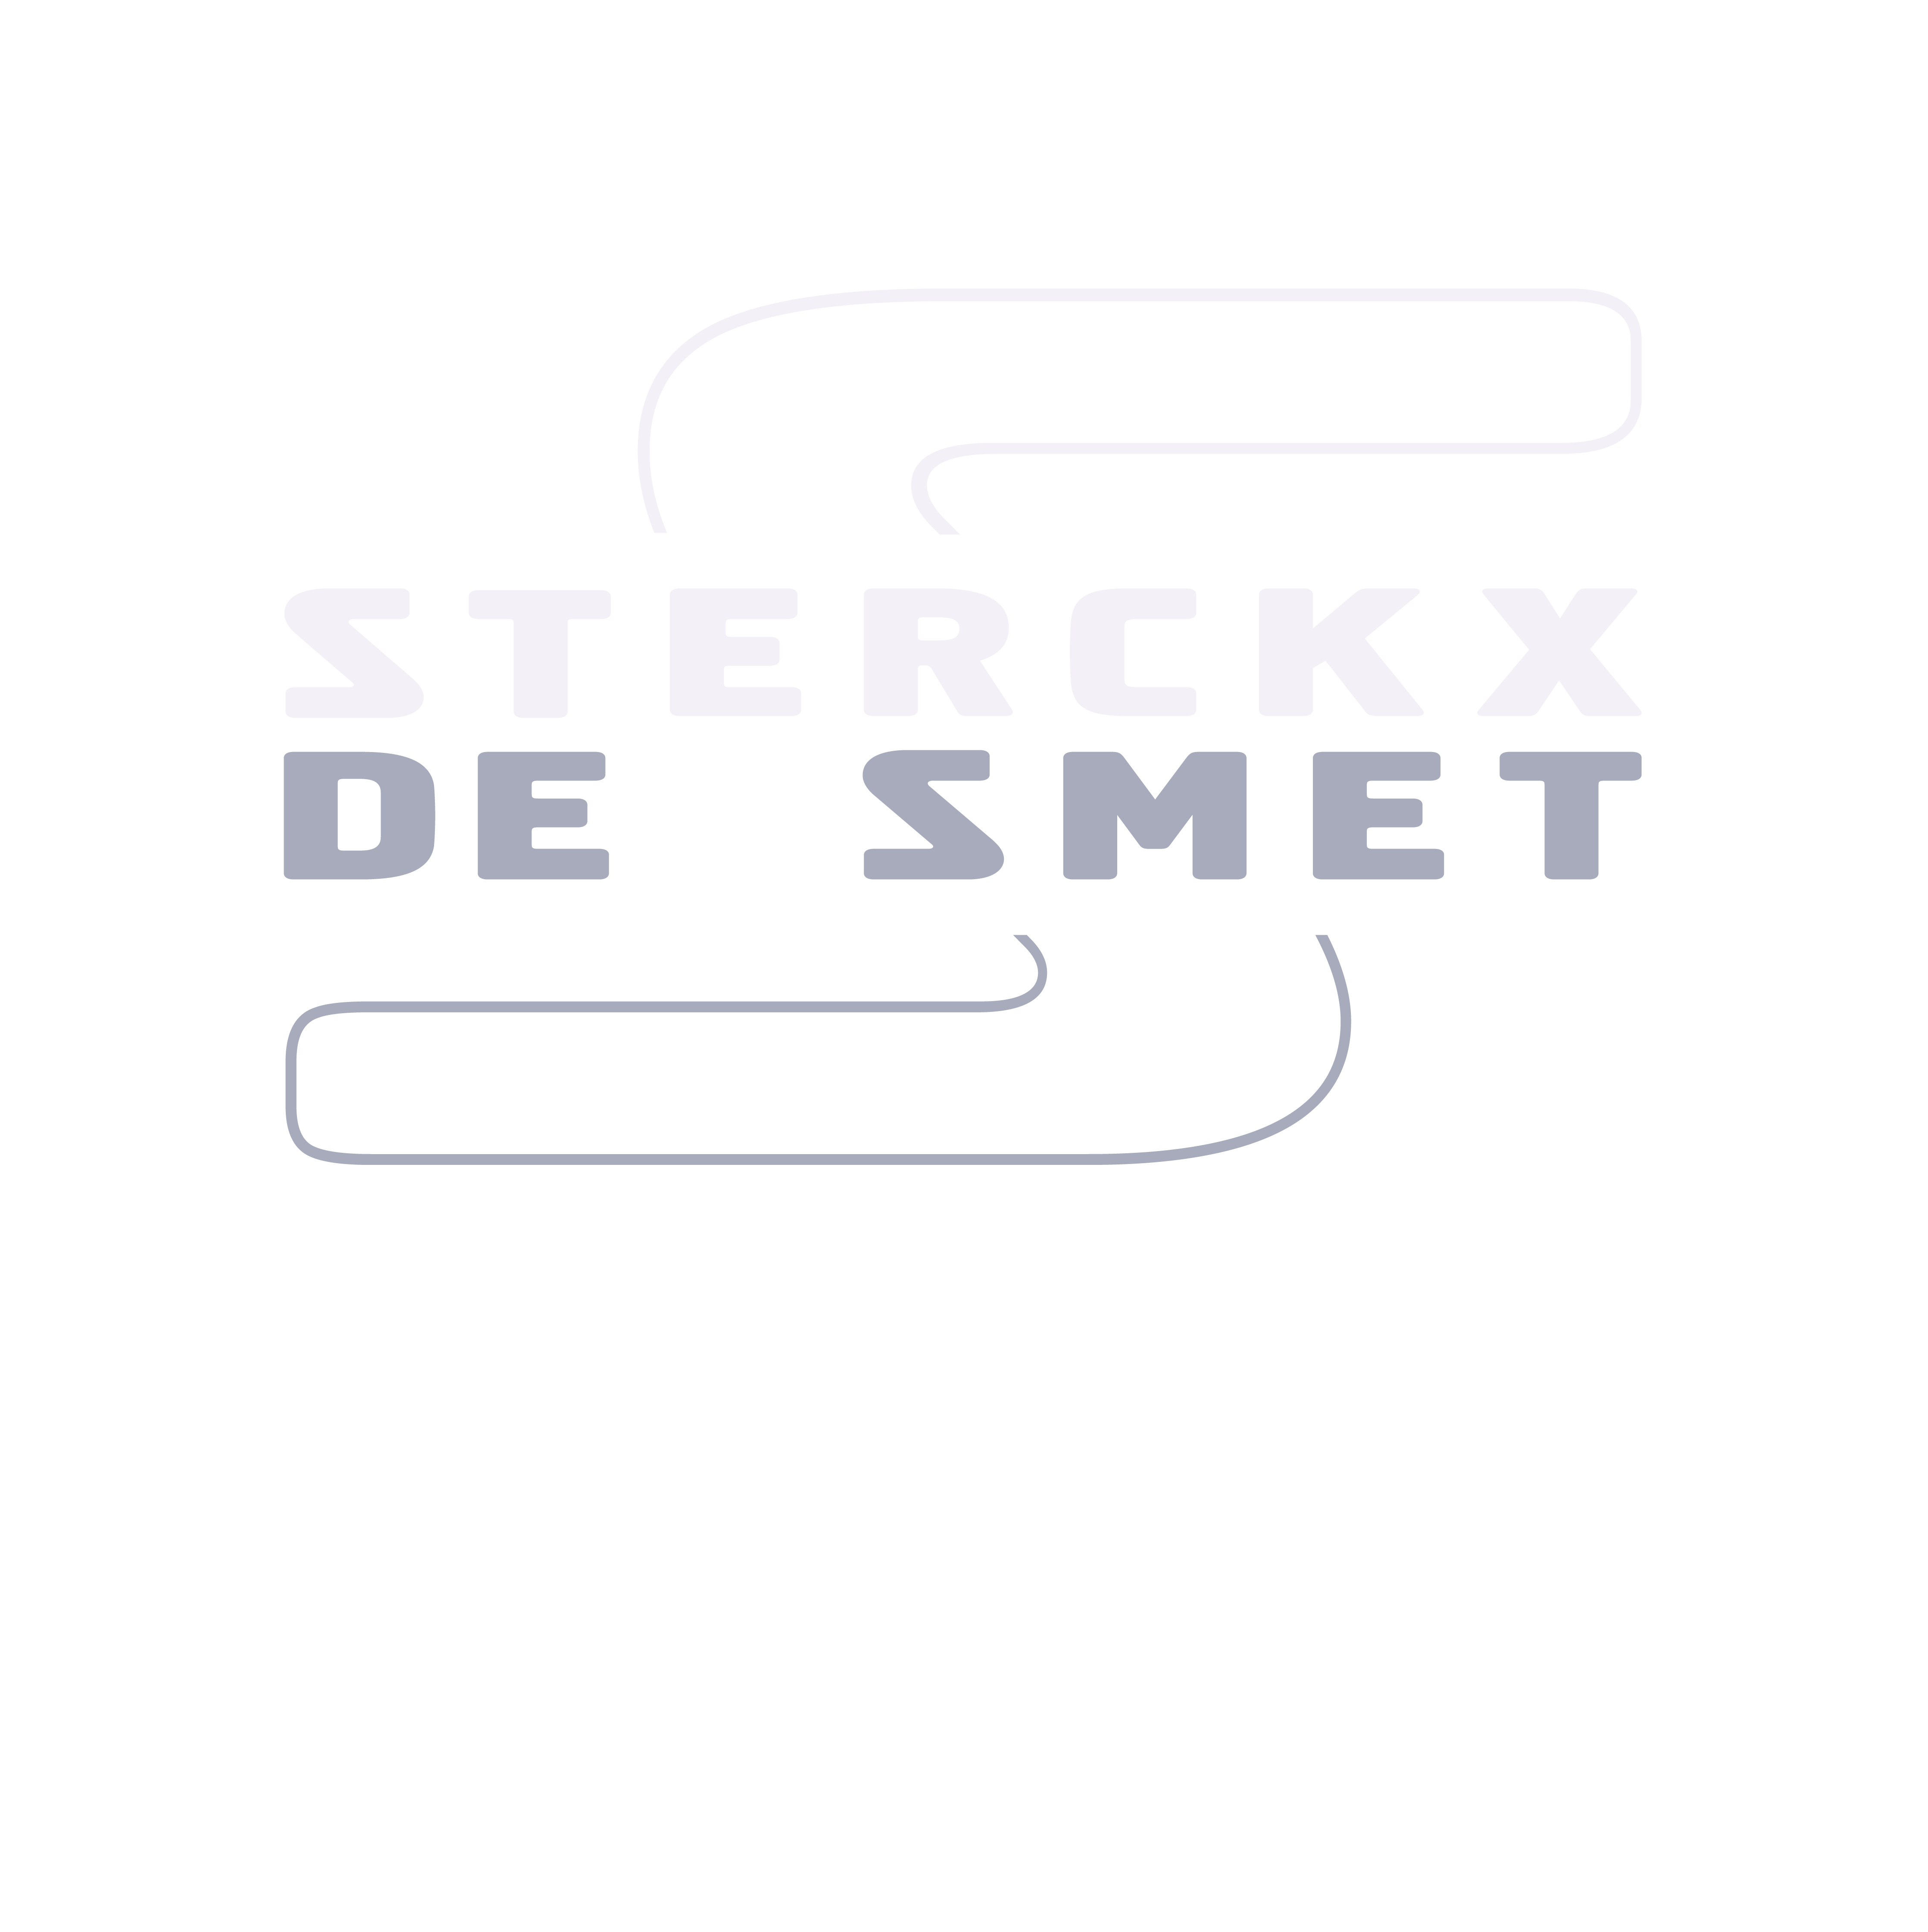 Sterckx Halle logo